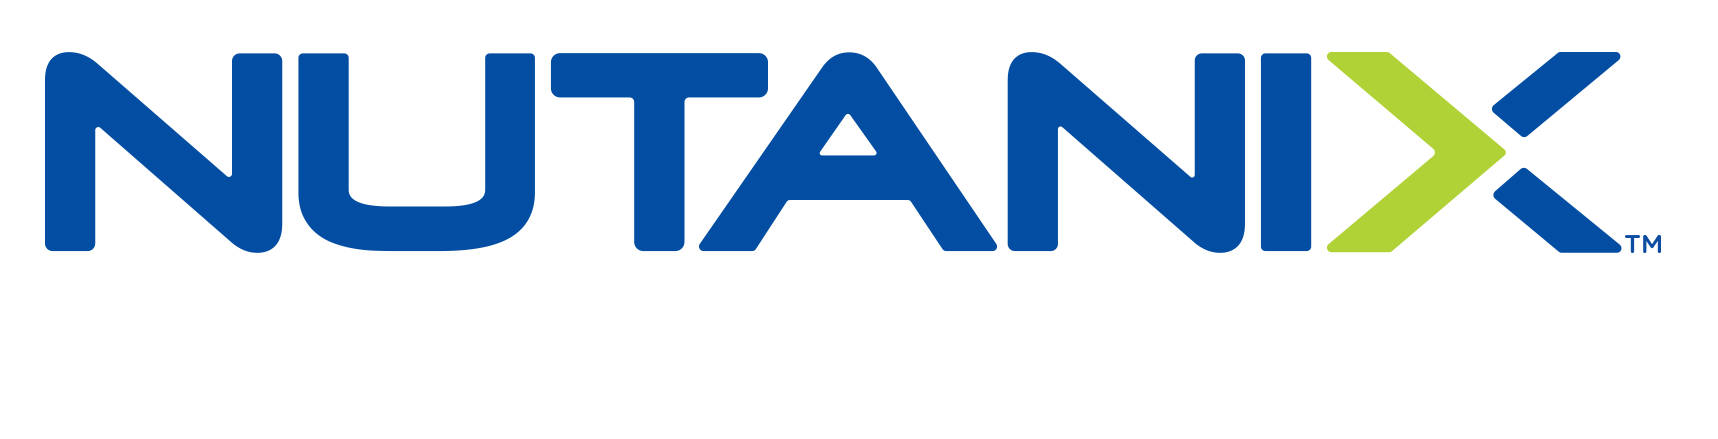 nutanix-logo-HI-REZ-full-color